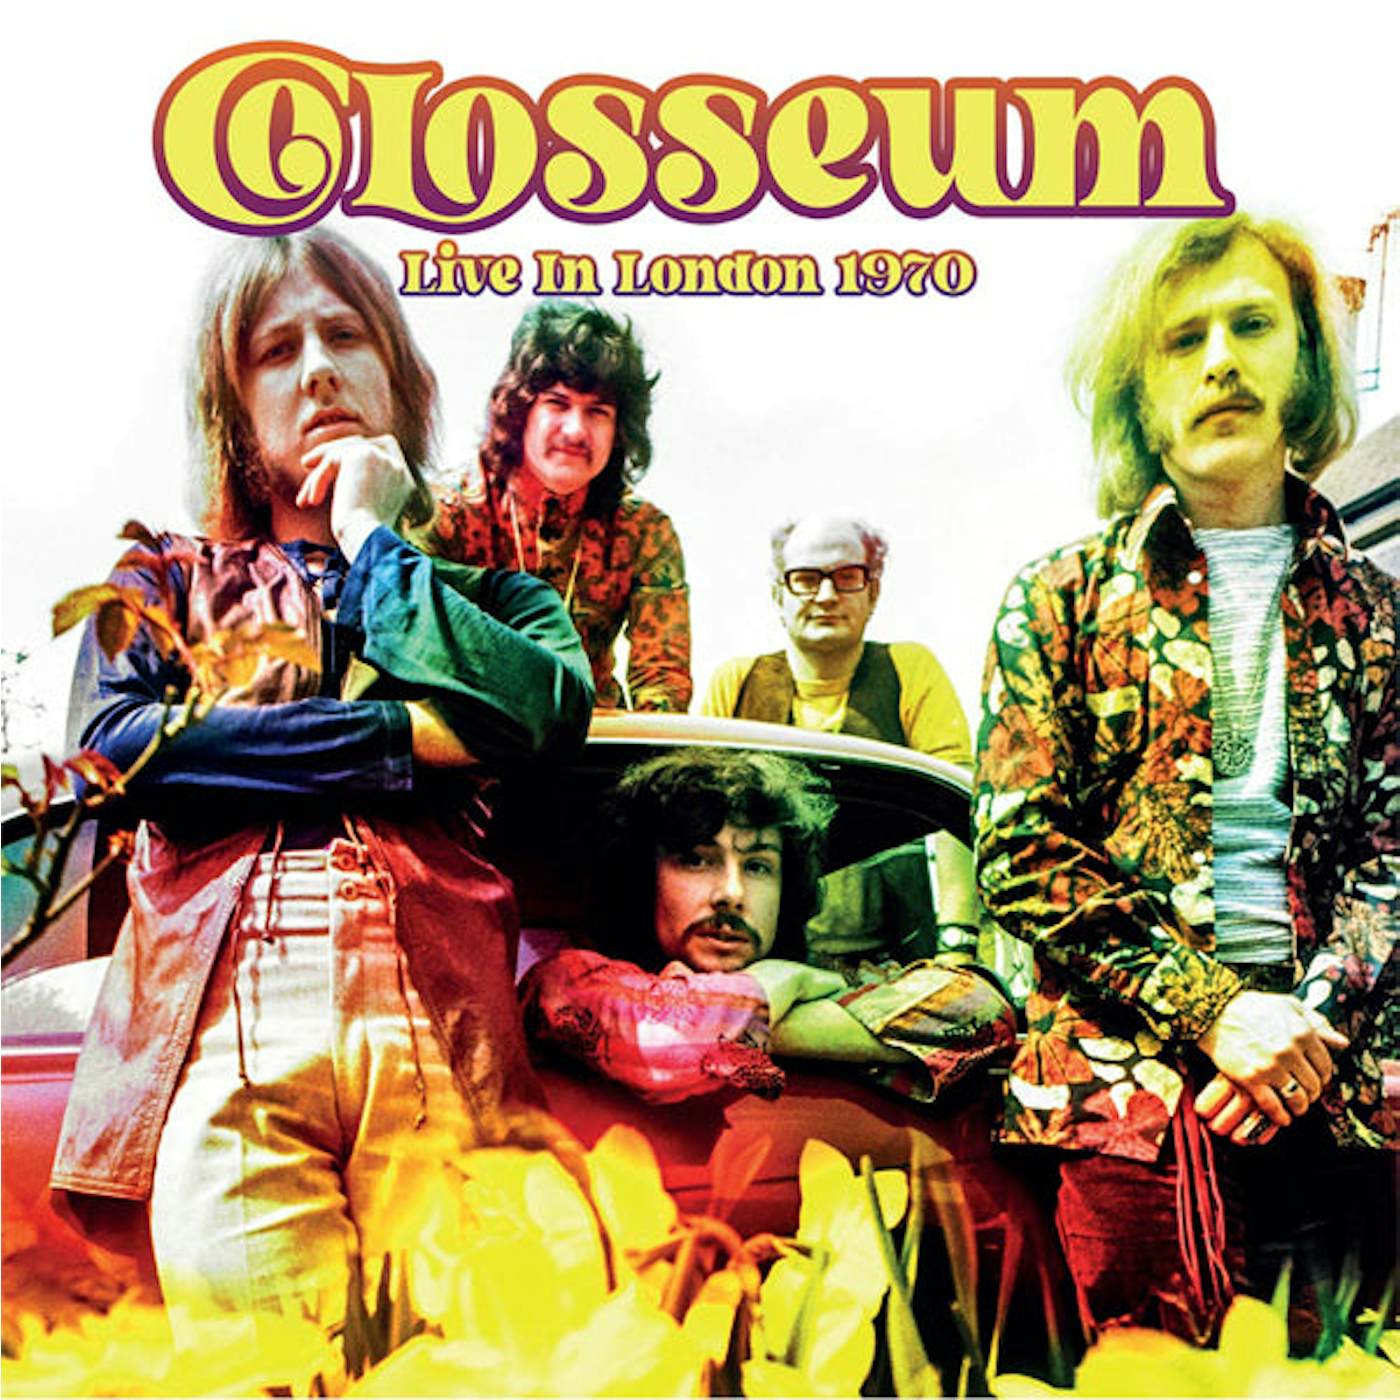 Colosseum LP - Live In London 1970 (2lp White Vinyl)